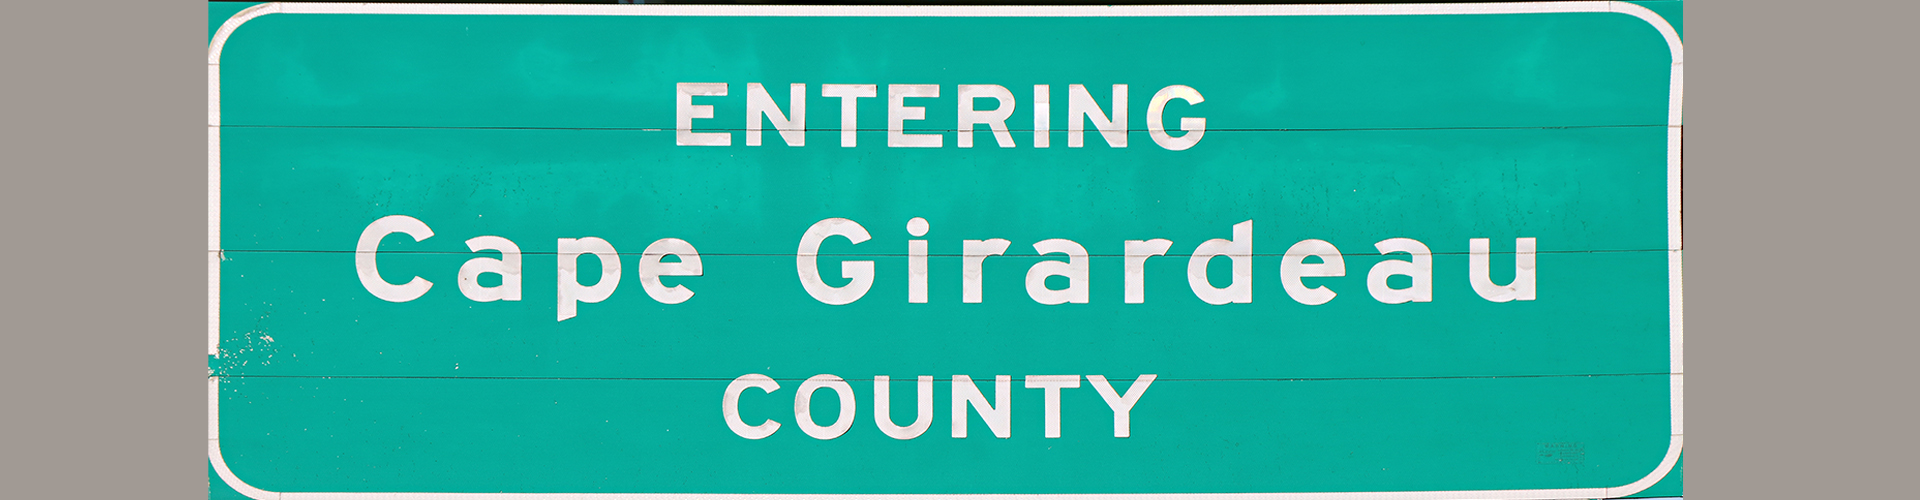 Cape Girardeau County